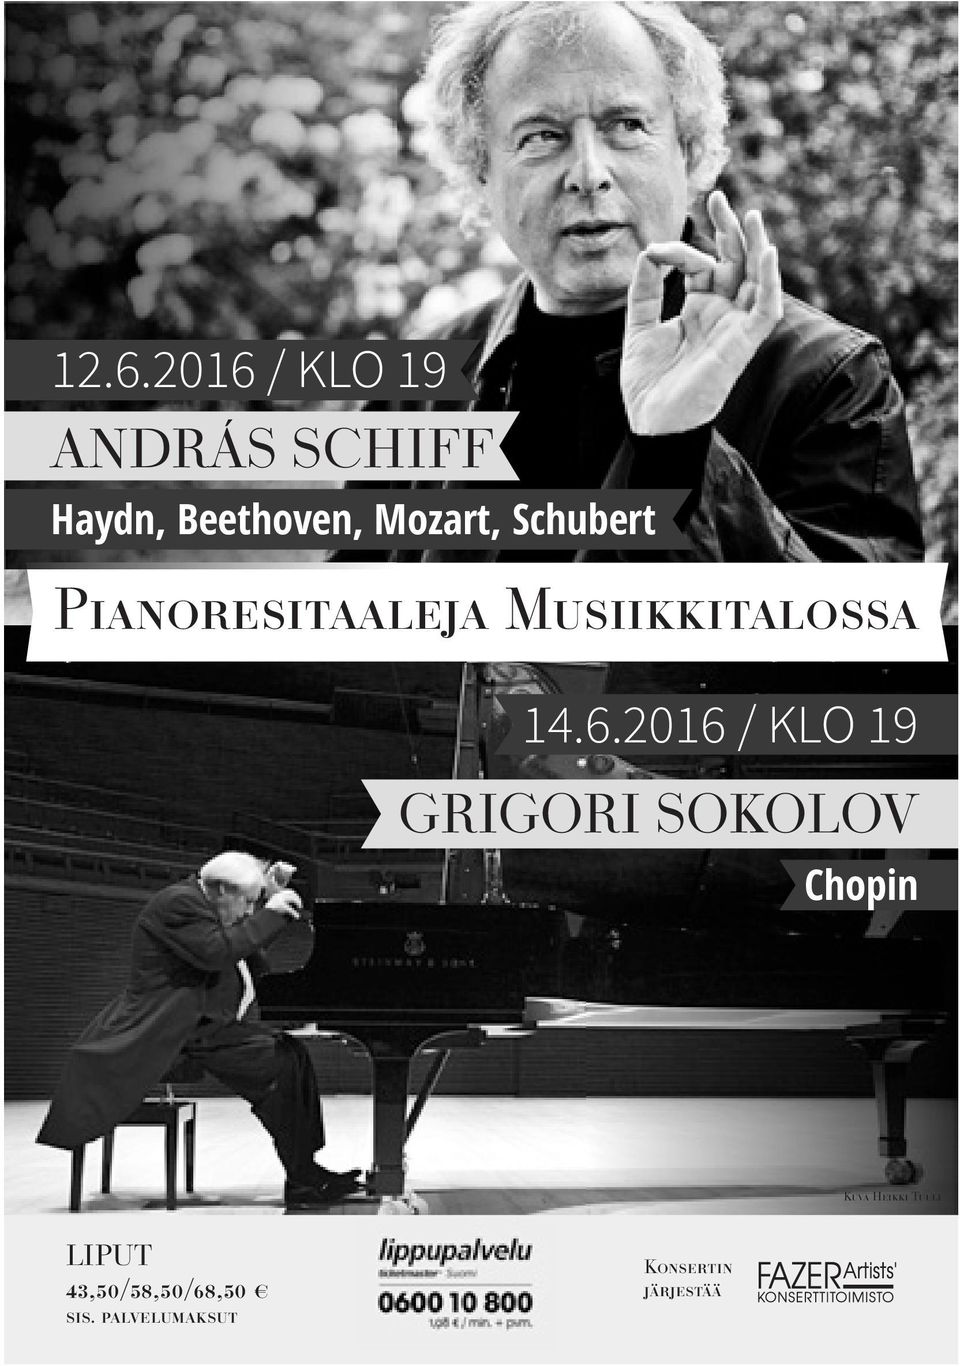 2016 / KLO 19 GRIGORI SOKOLOV Chopin Kuva Heikki Tuuli